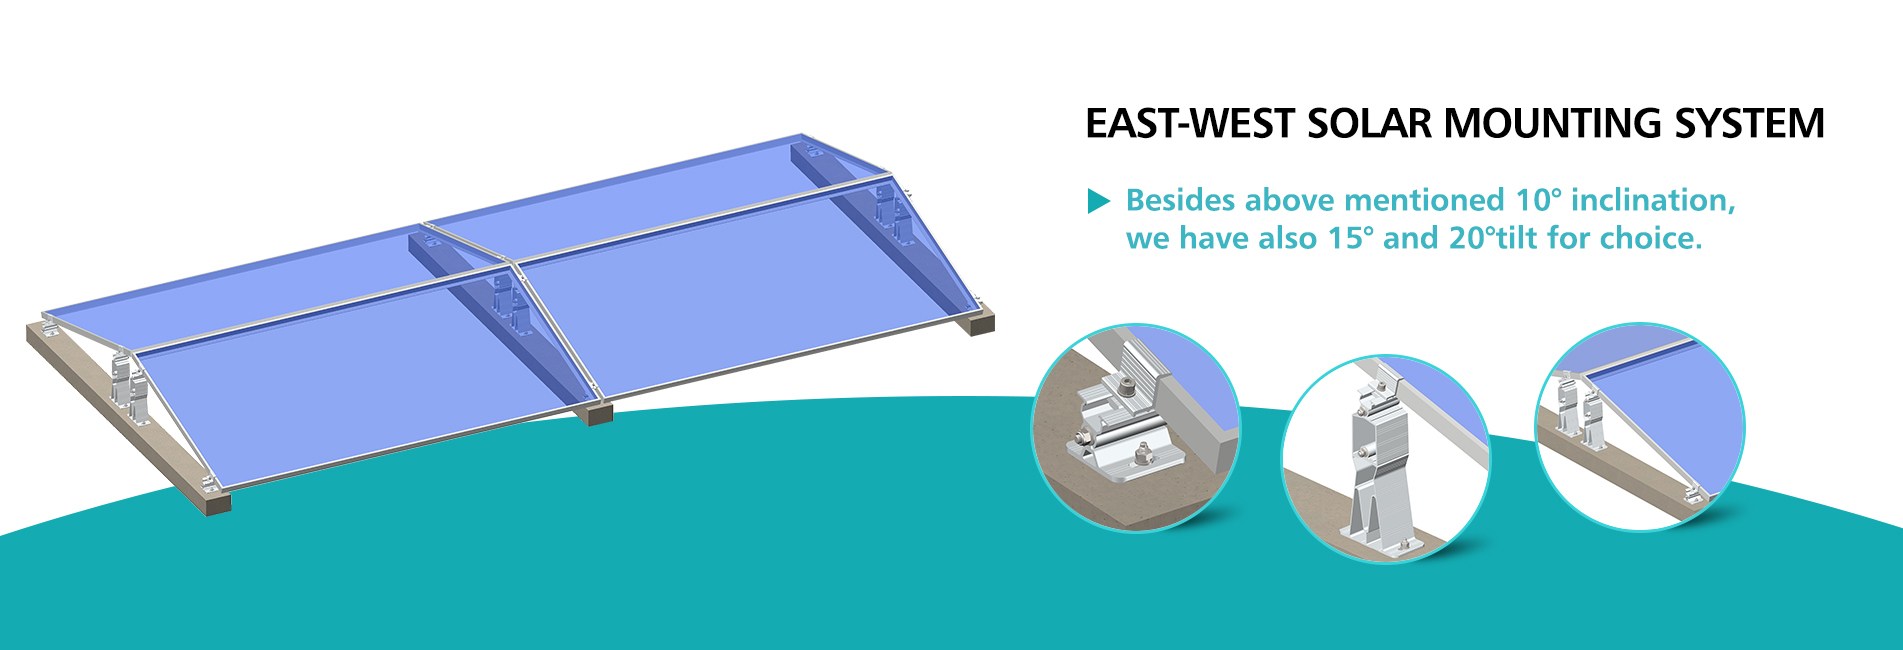 East-west aluminum solar mounting